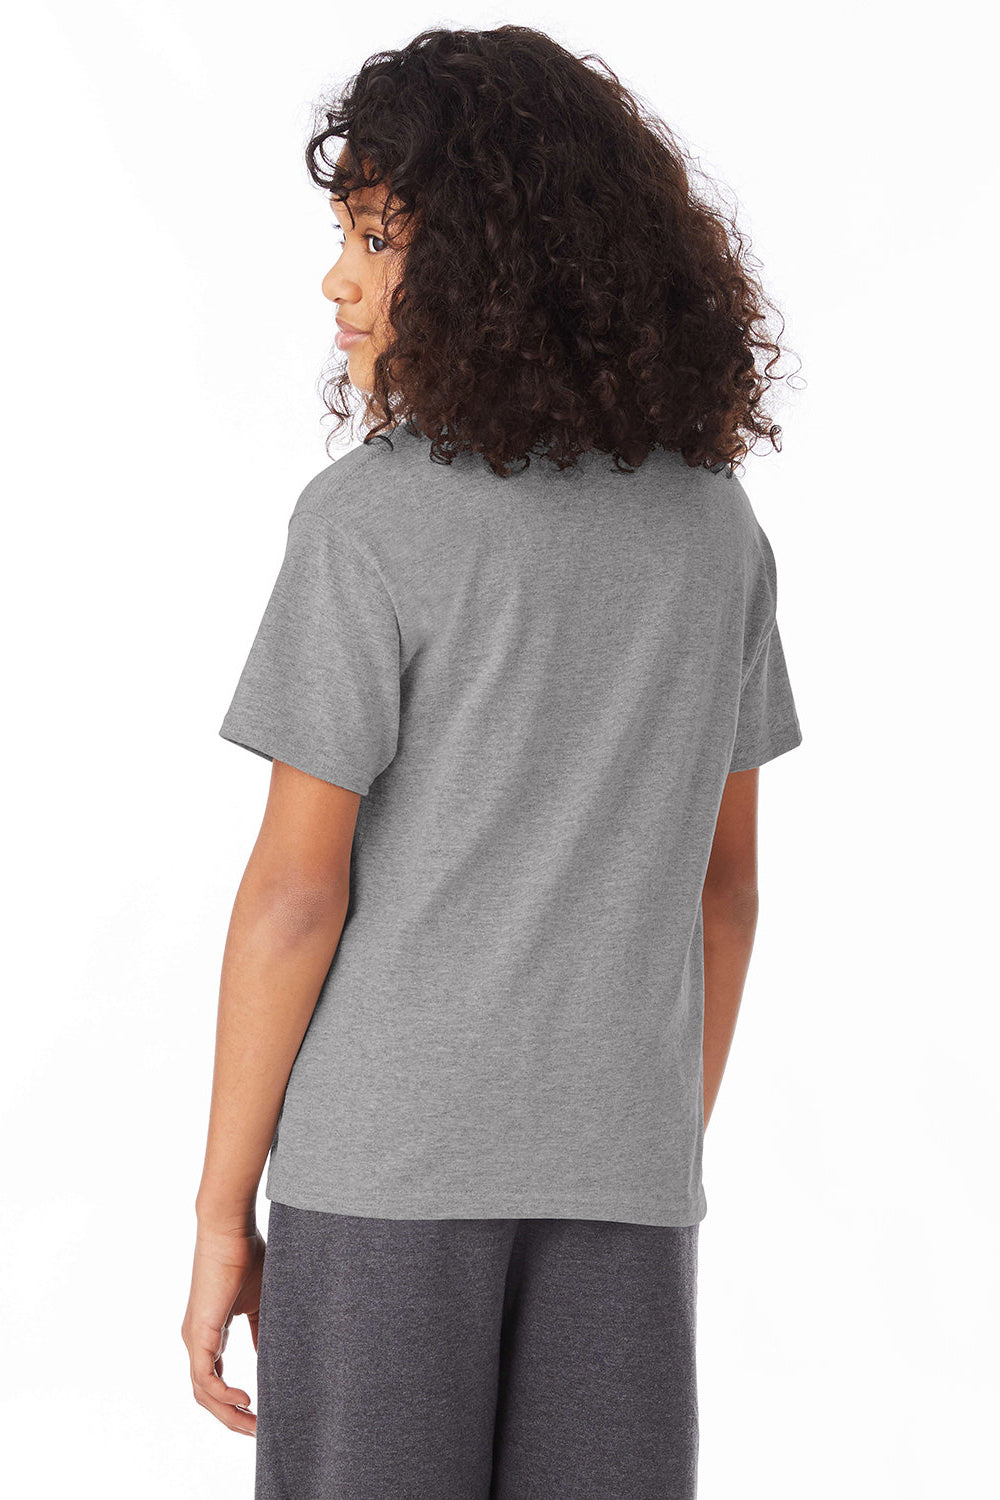 Hanes 5370 Youth EcoSmart Short Sleeve Crewneck T-Shirt Oxford Grey Back